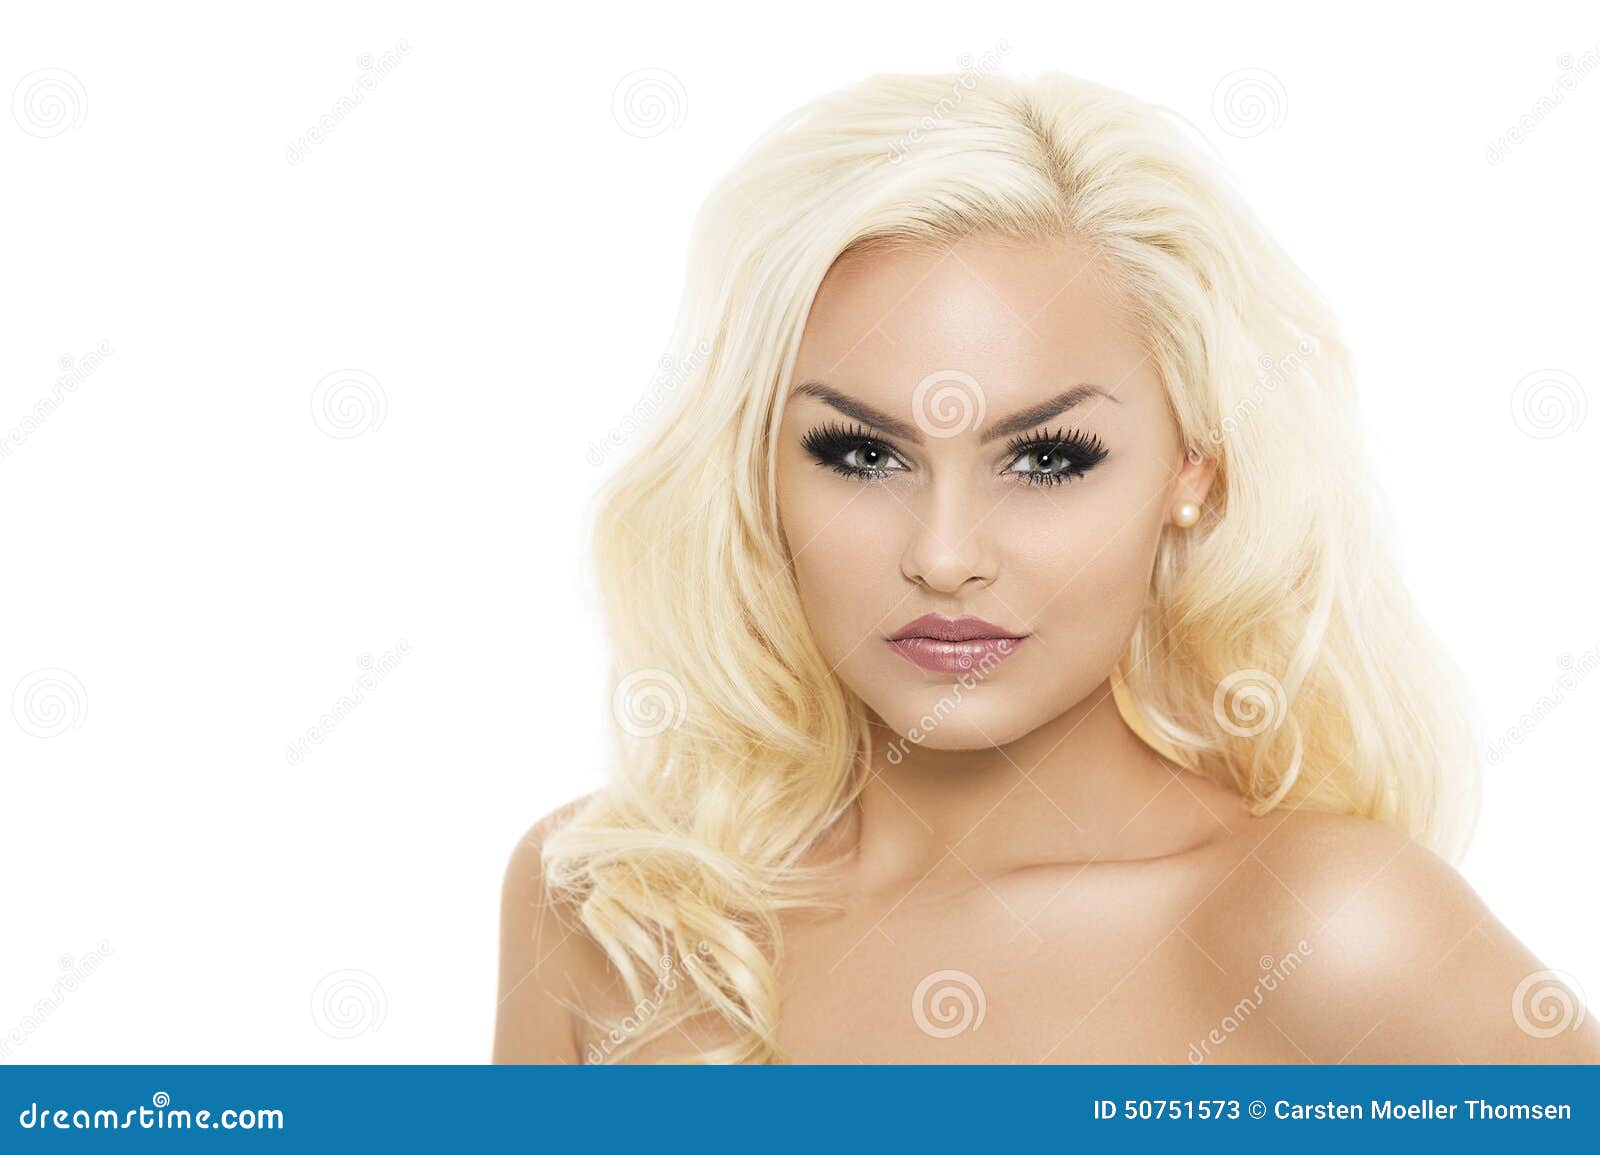 Stockfoto med beskrivningen Seductive blond-haired woman with